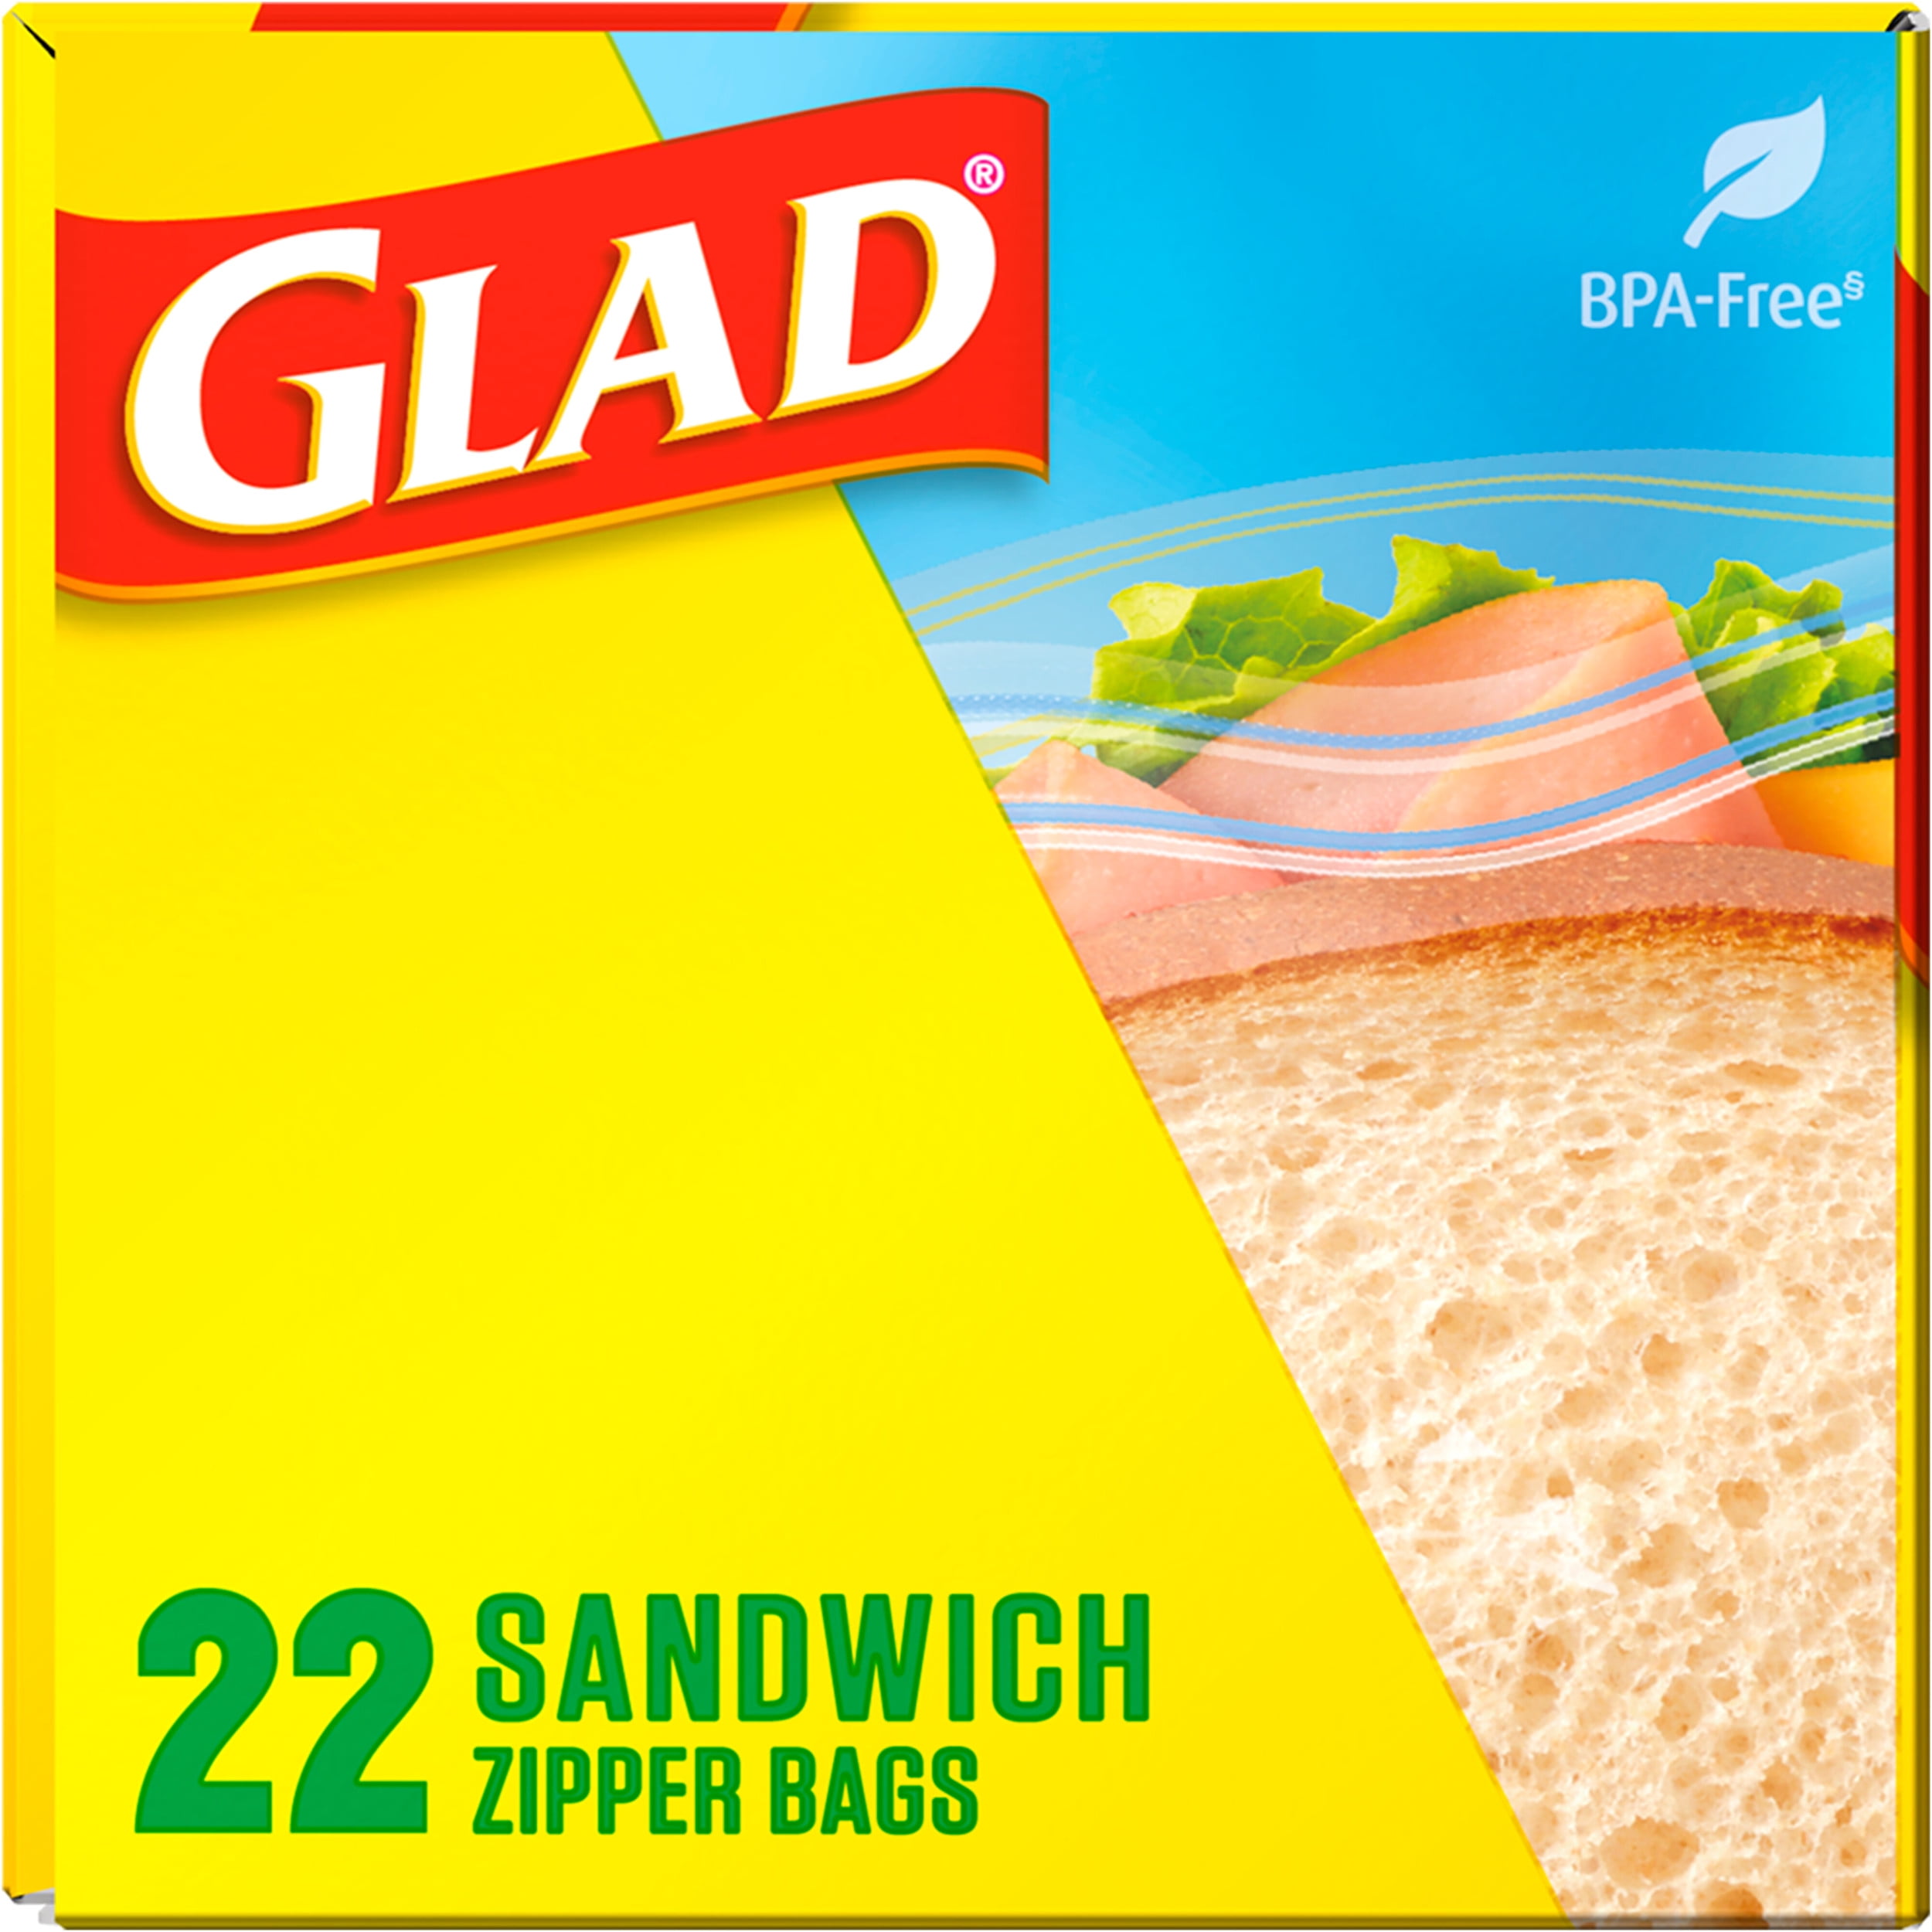 Glad Sandwich Zipper Bags OZ / Gms